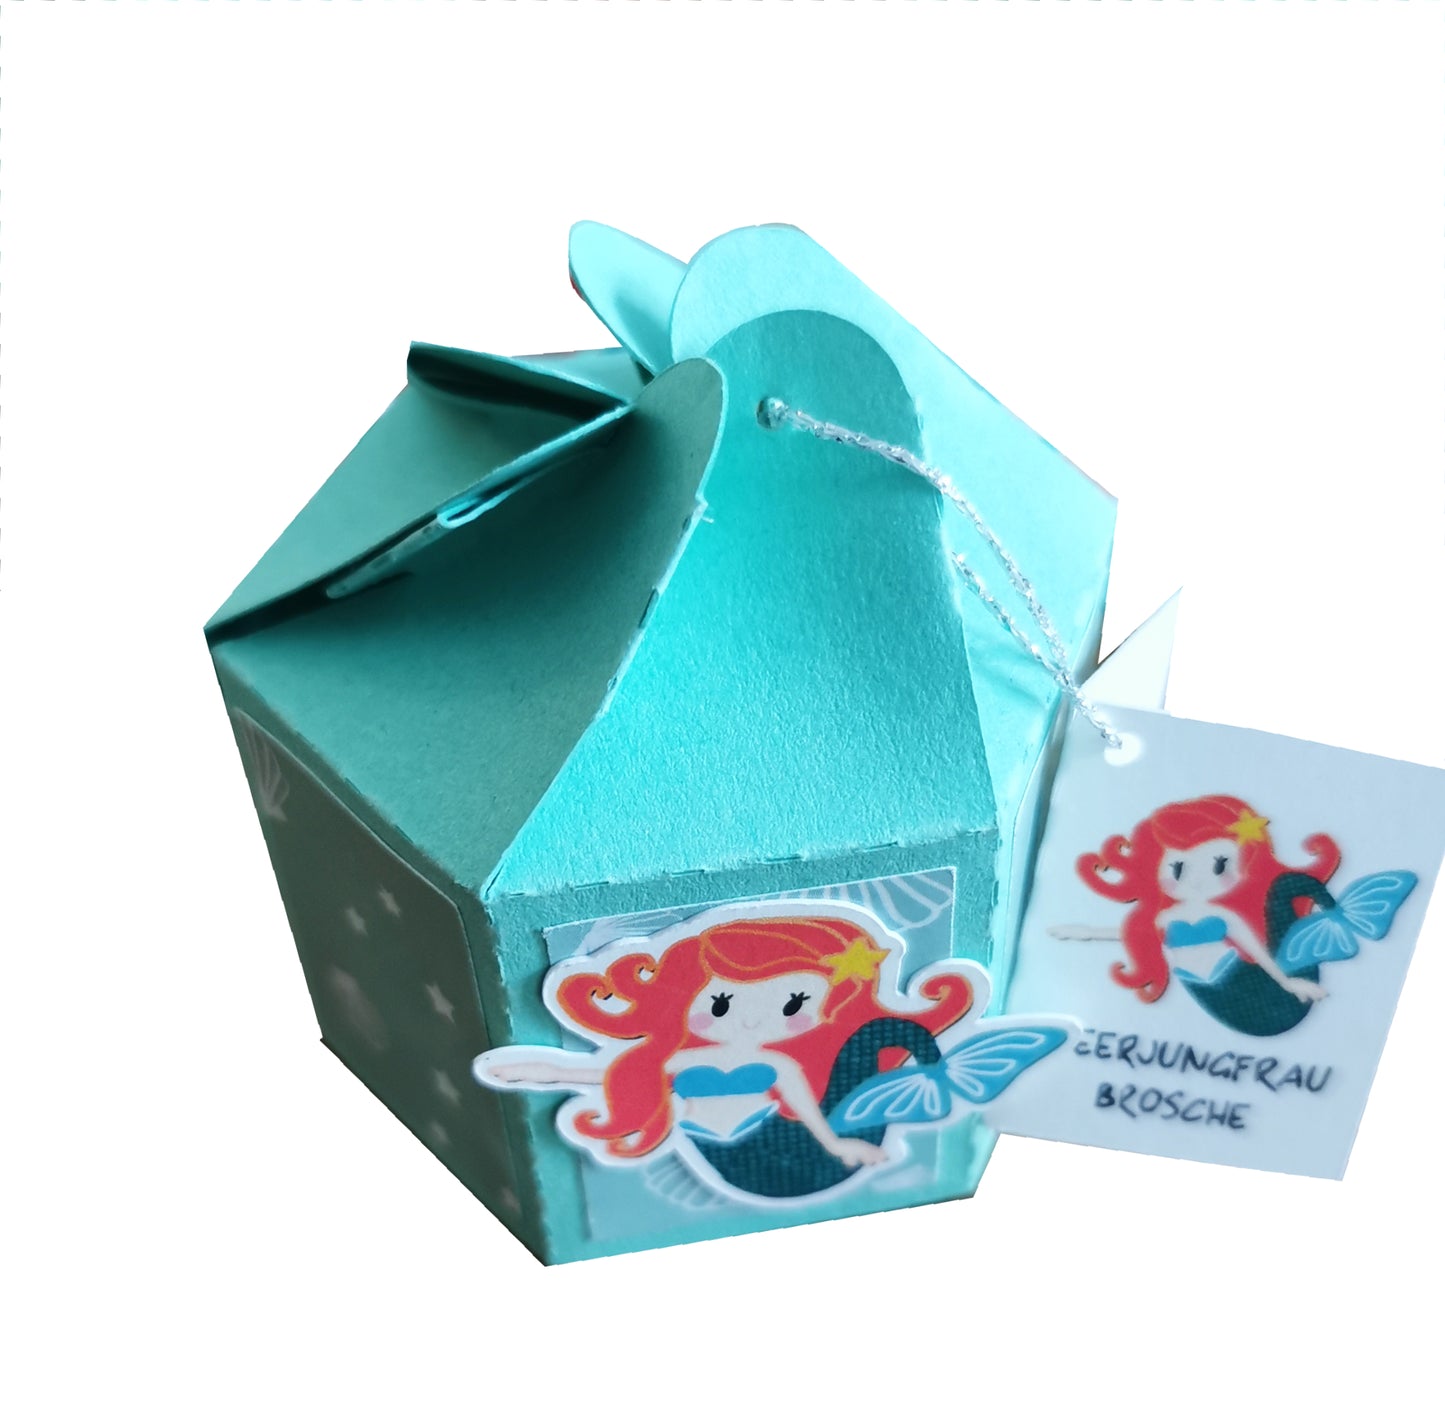 Brosche Meerjungfrau mit Verpackung